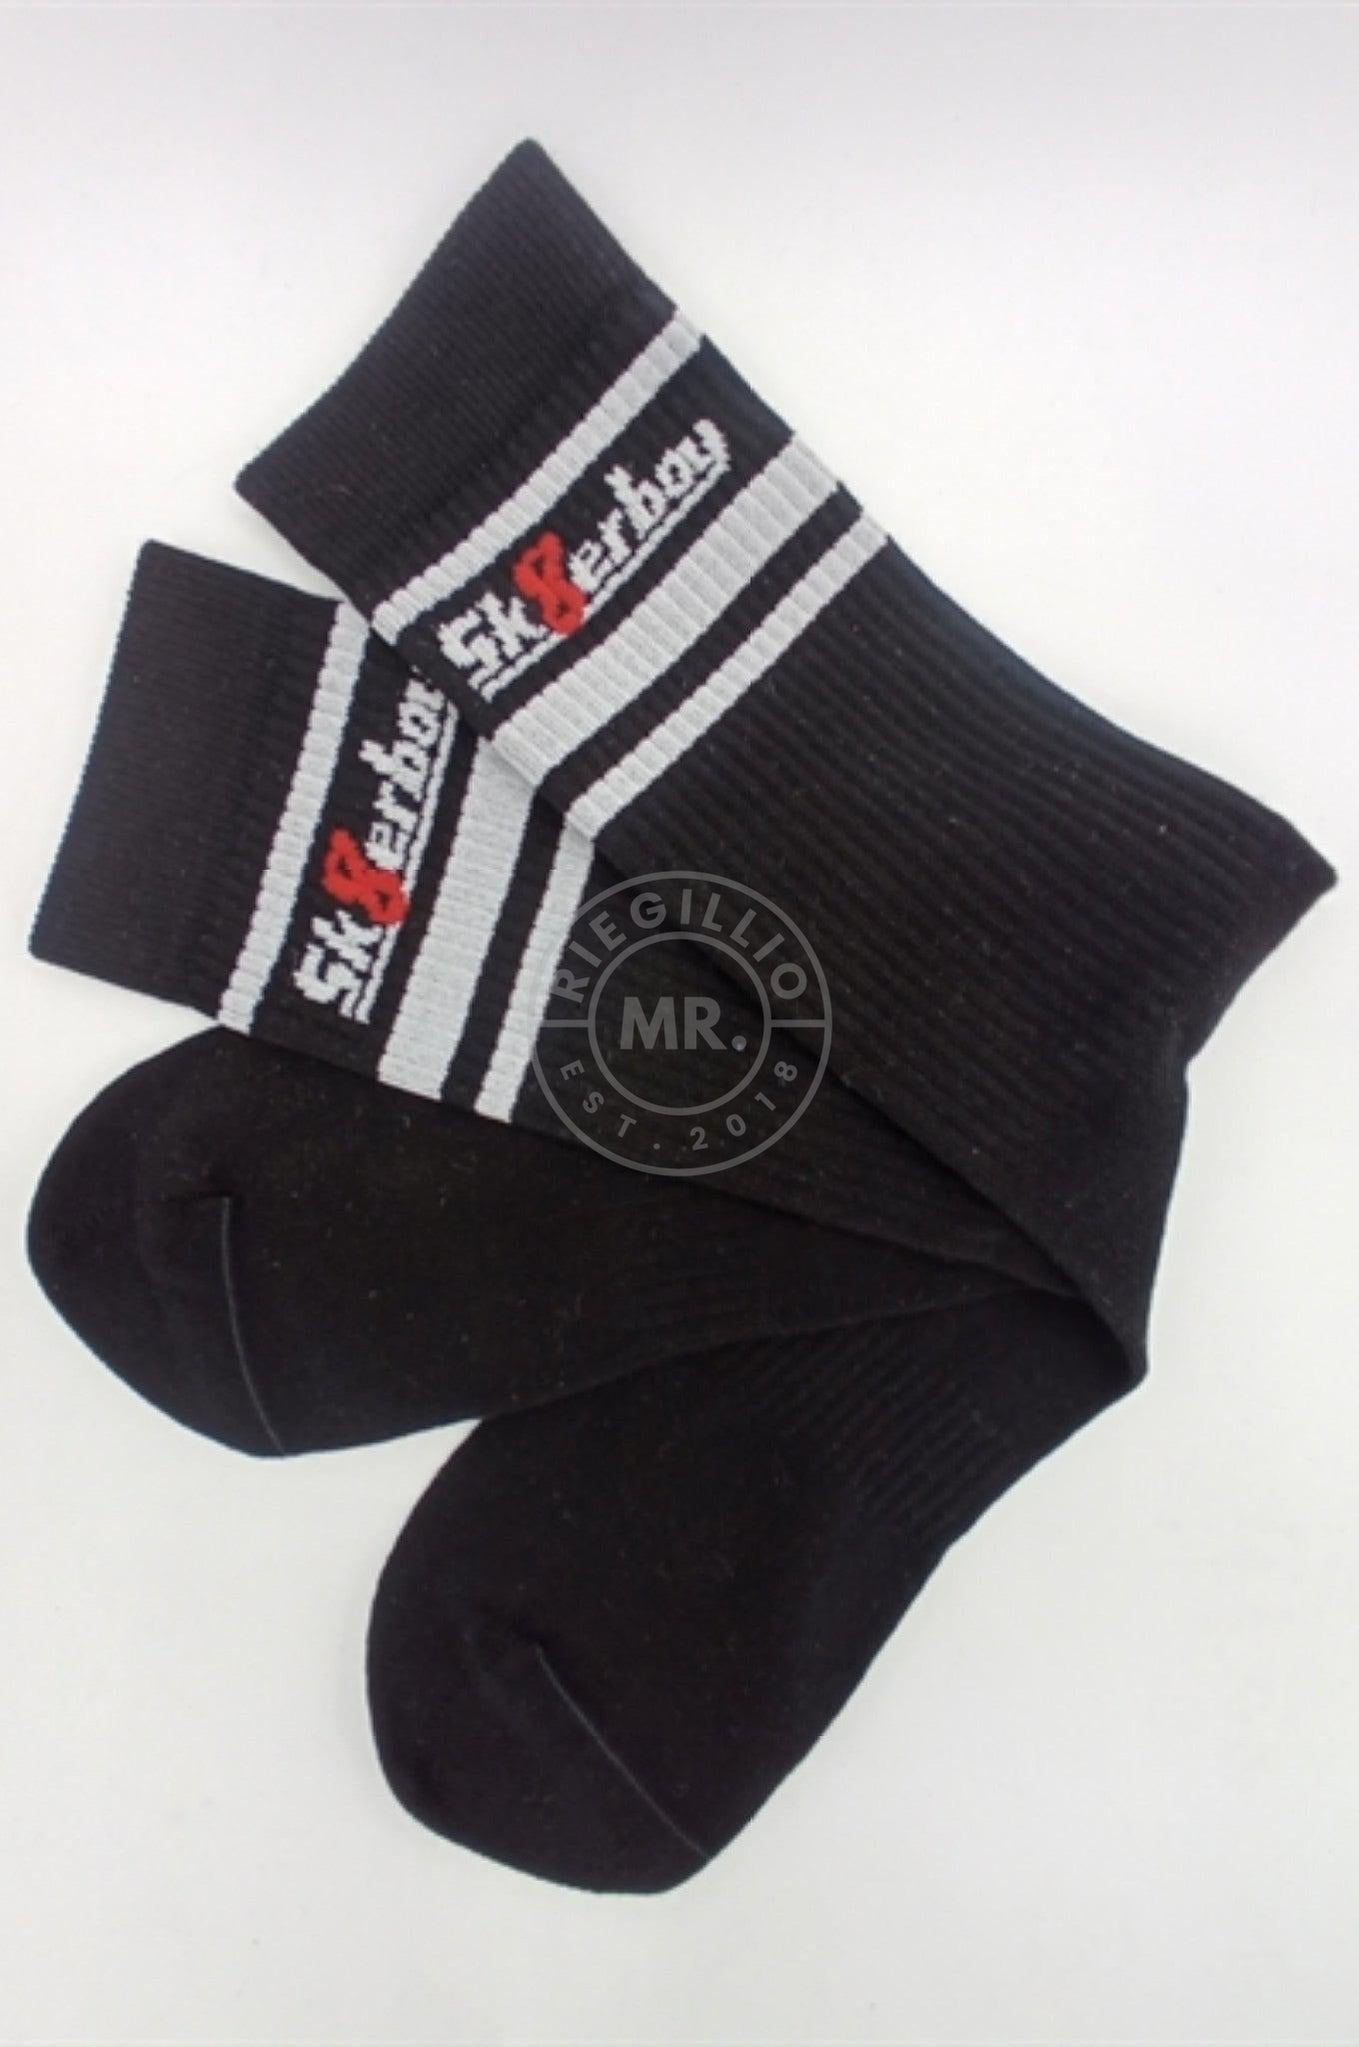 Sk8erboy VICTORY Socks - Black *DISCONTINUED ITEM* at MR. Riegillio